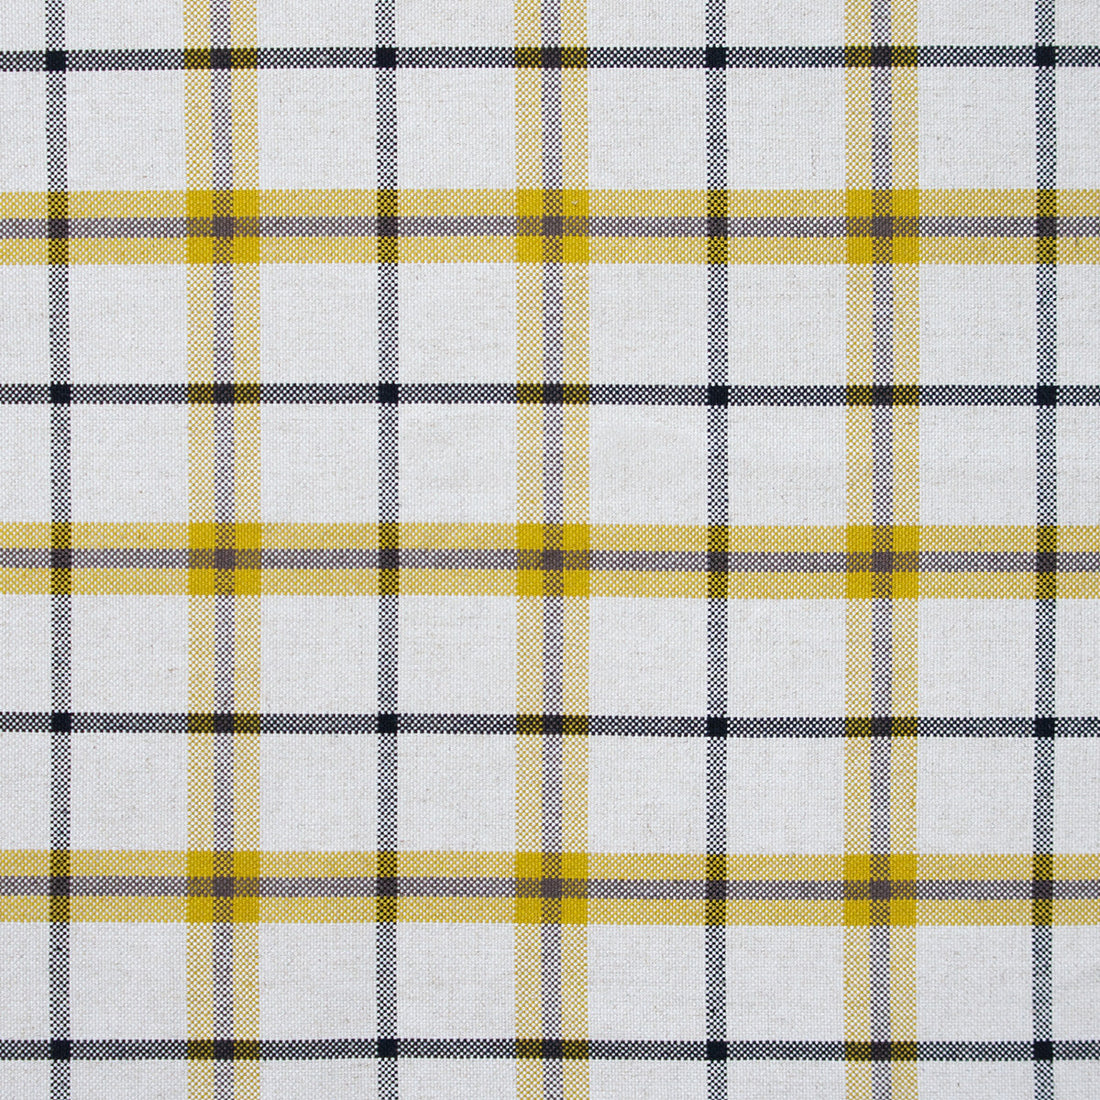 Ventura fabric in amarillo color - pattern GDT5655.002.0 - by Gaston y Daniela in the Gaston Rio Grande collection